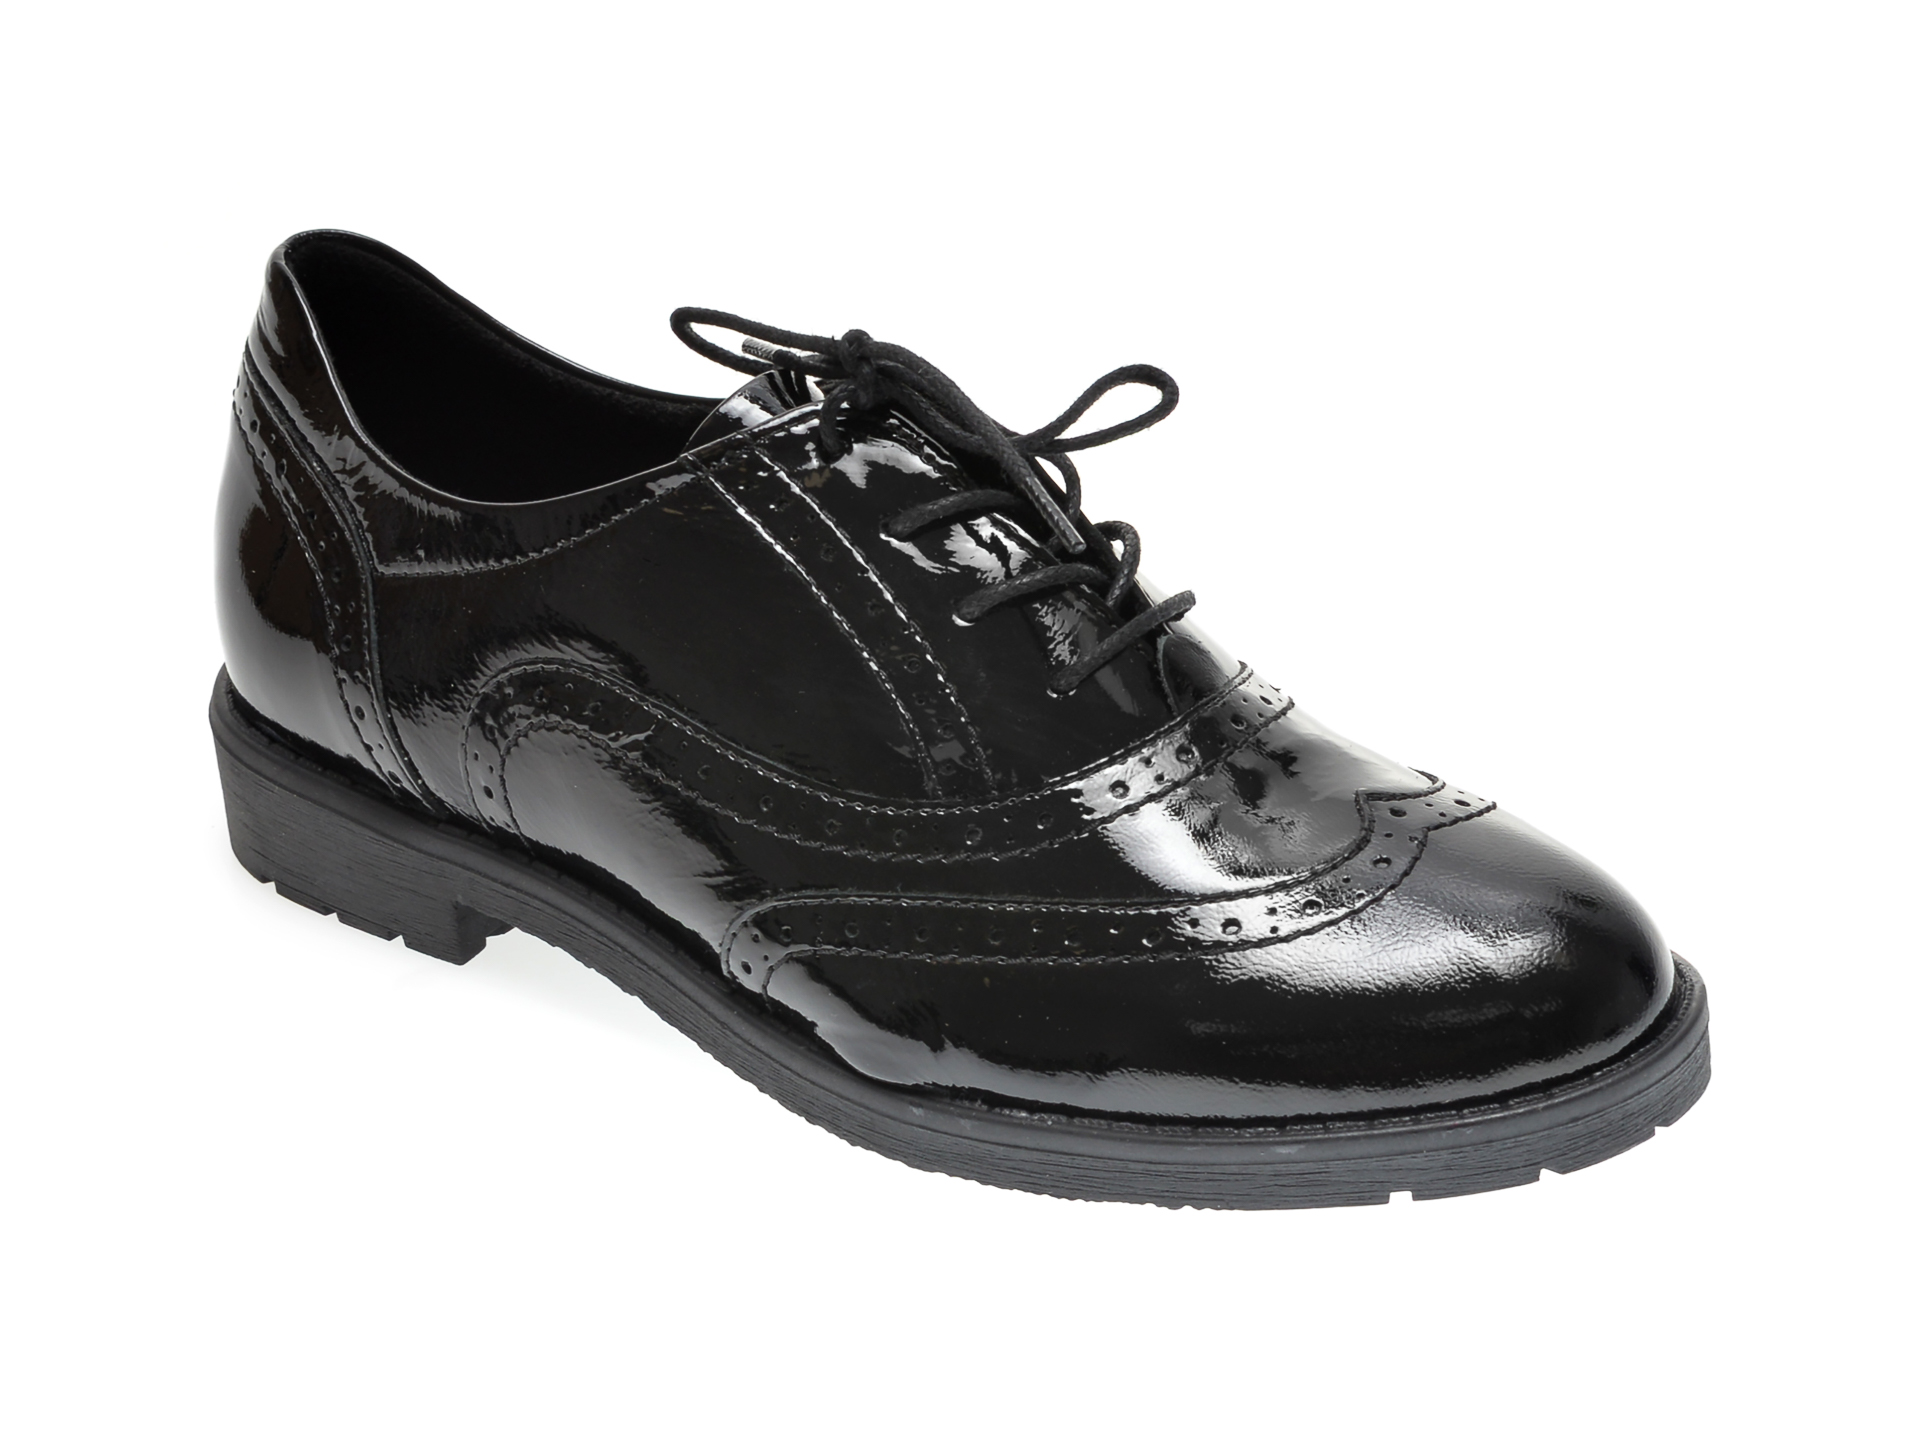 Pantofi ILOZ negri, 1050, din piele naturala lacuita